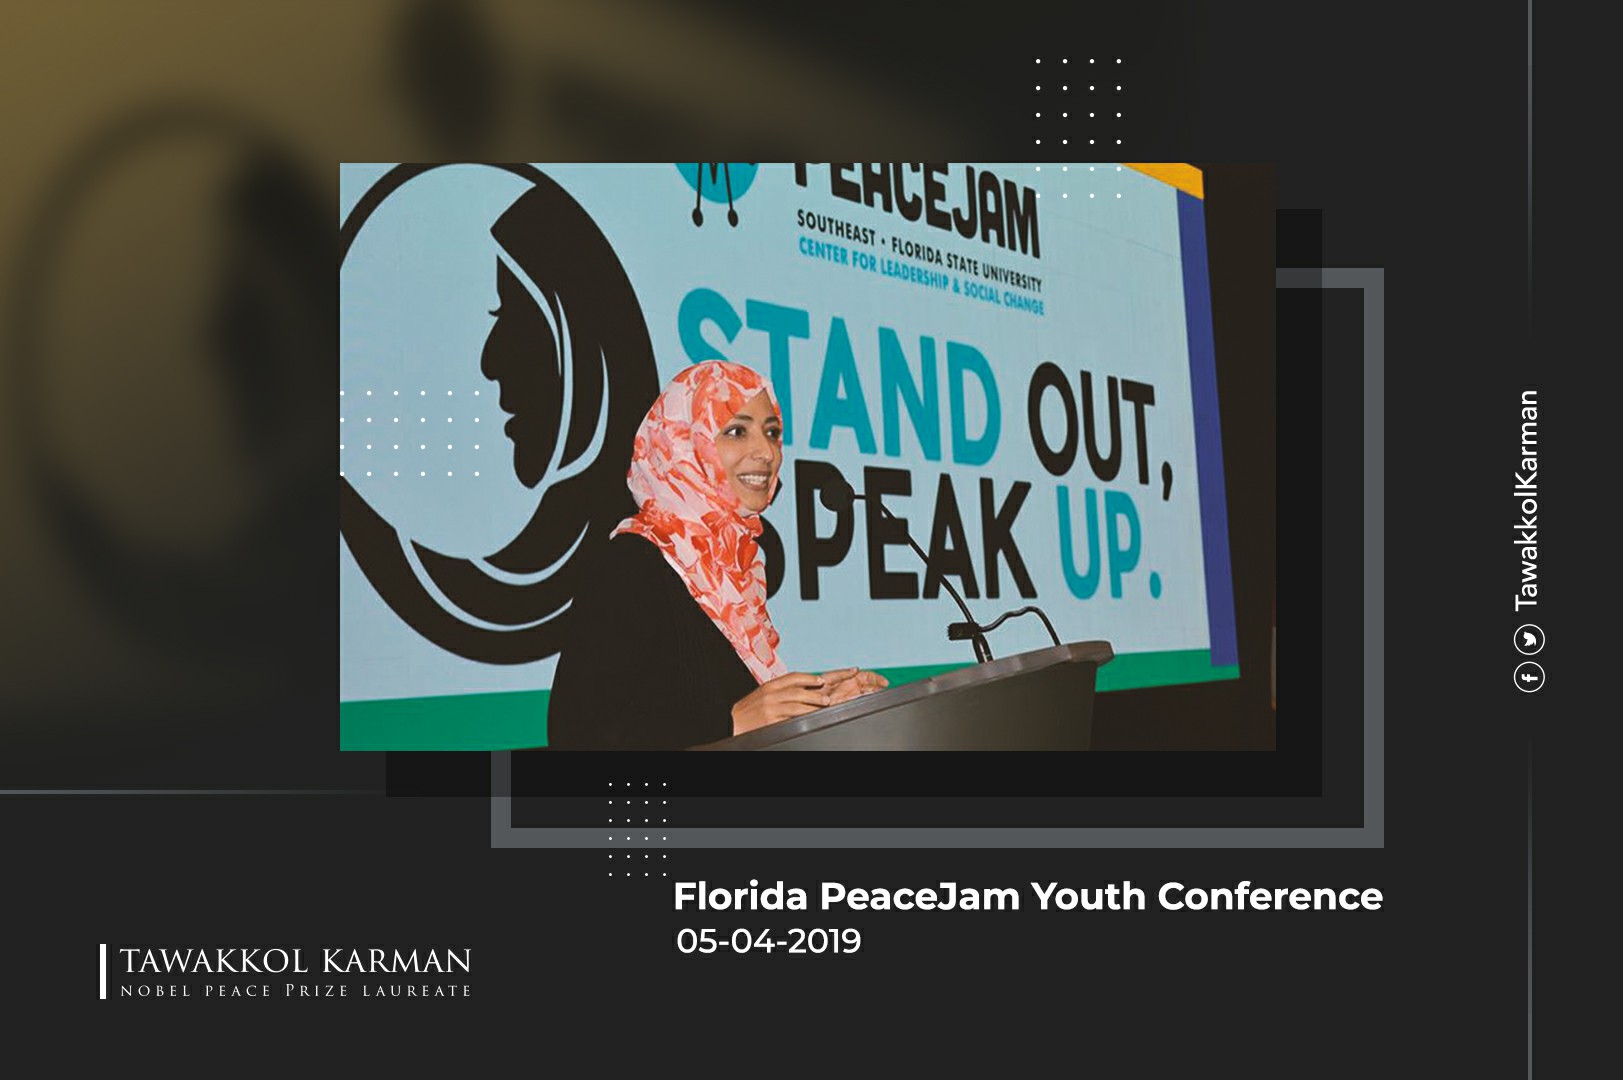 Tawakkol Karman’s Speech at the Florida PeaceJam Youth Conference